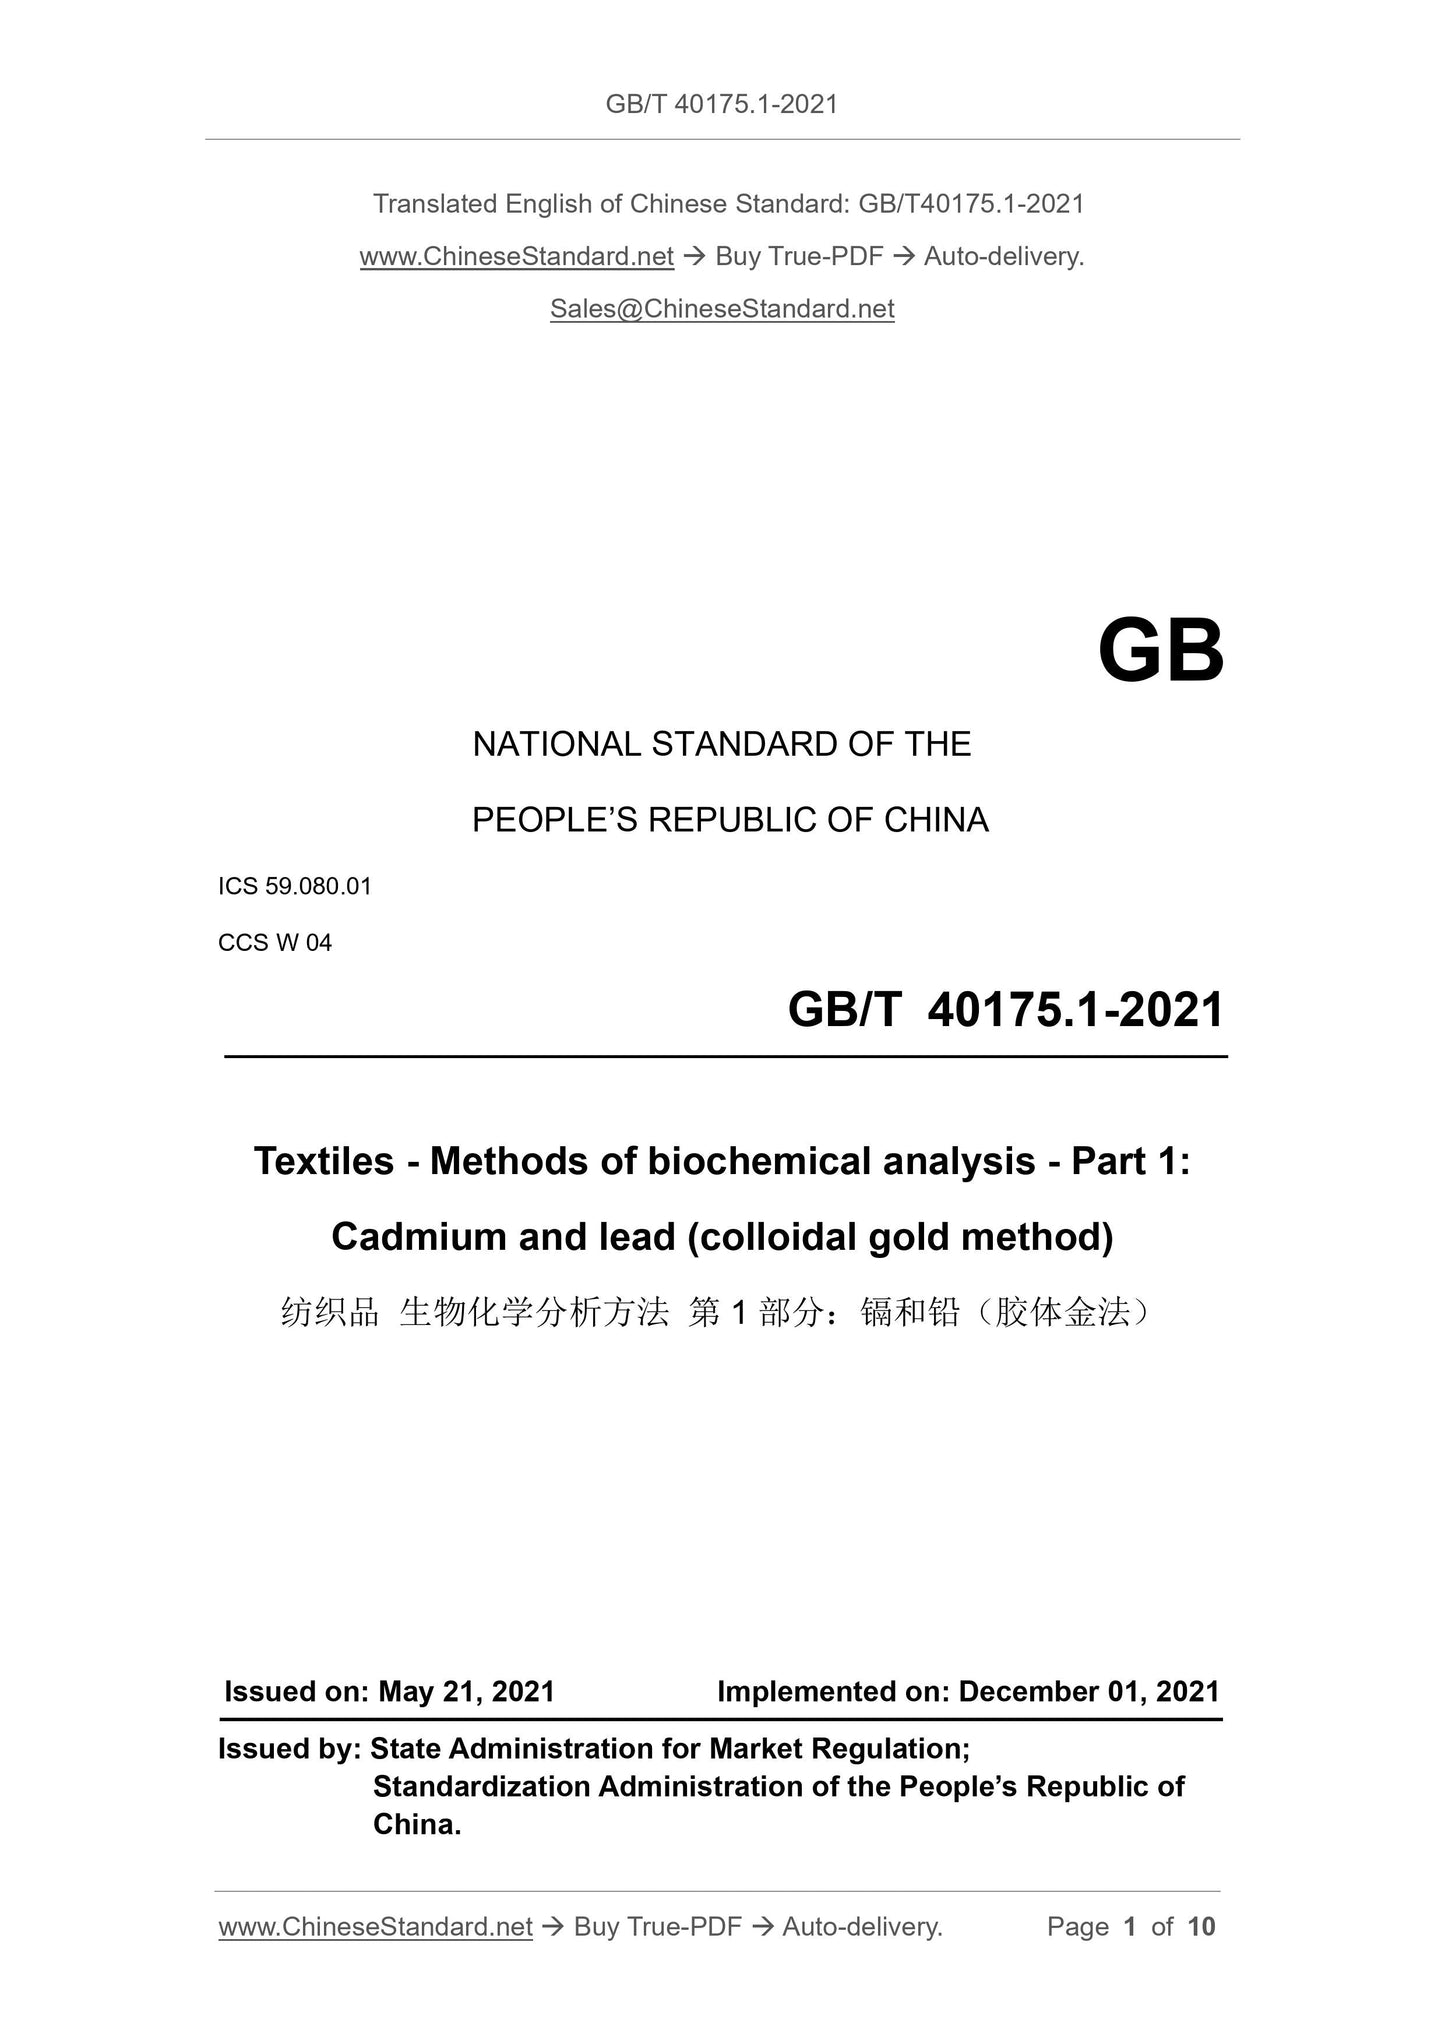 GBT40175.1-2021 Page 1